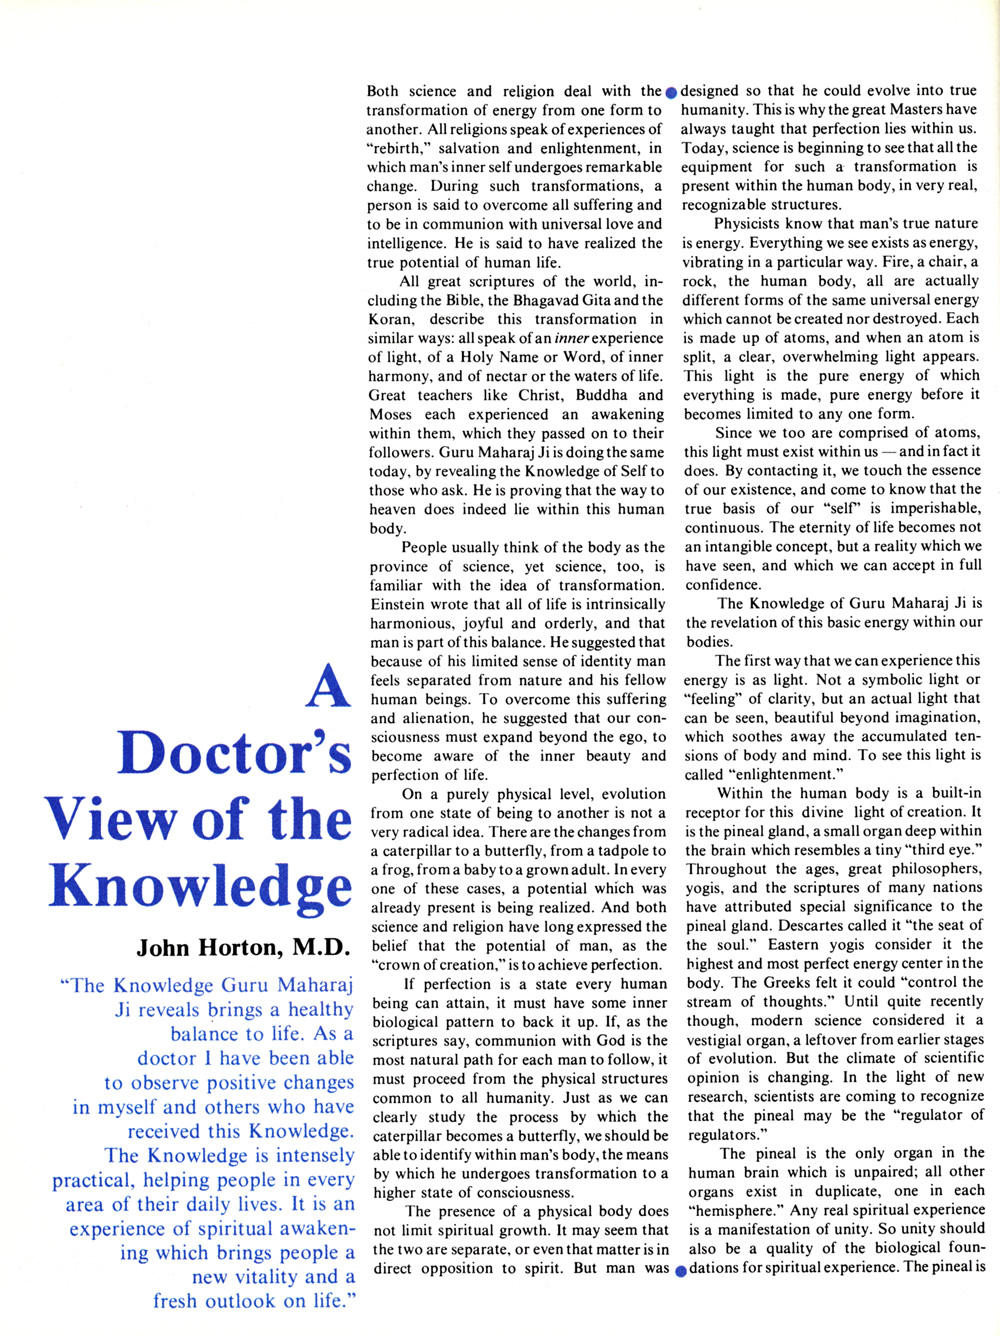 page44_Doctors_View_of_Knowledge.jpg 509.0K